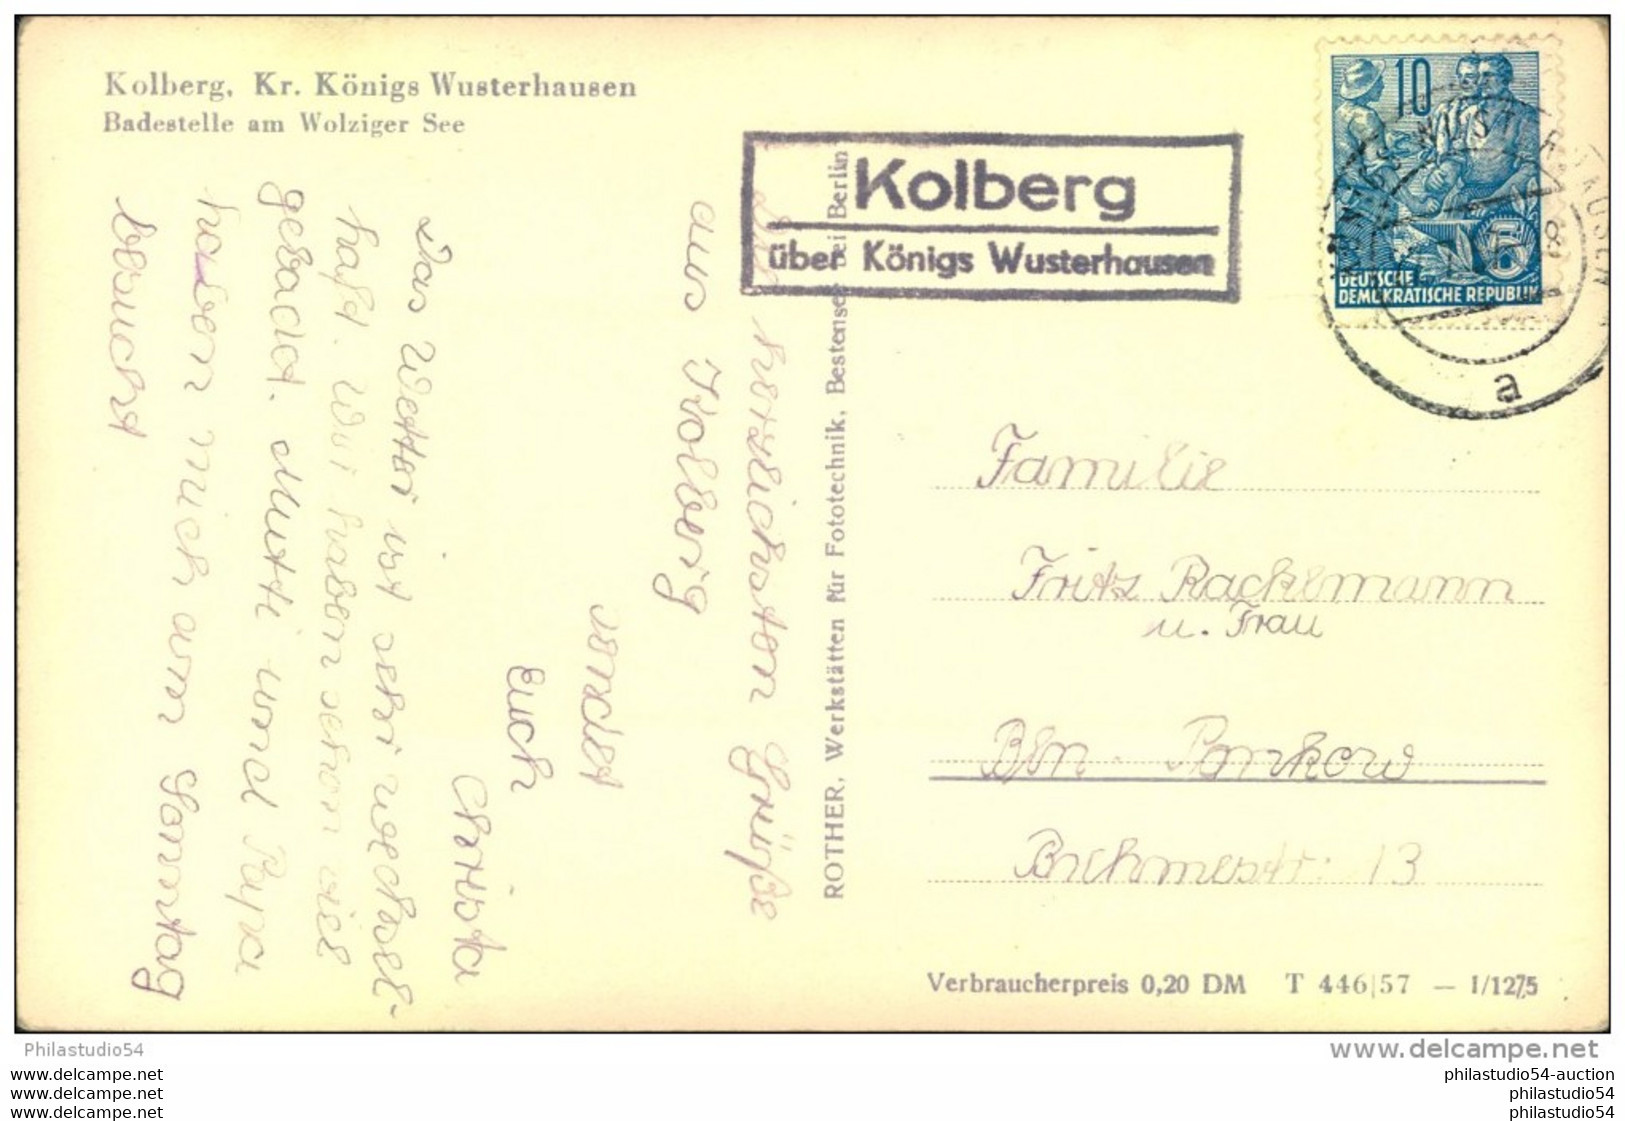 Brandenburg : 1957, Postkarte Posthilfsstelle "Kolberg über Königs Wusterhausen" - Maschinenstempel (EMA)